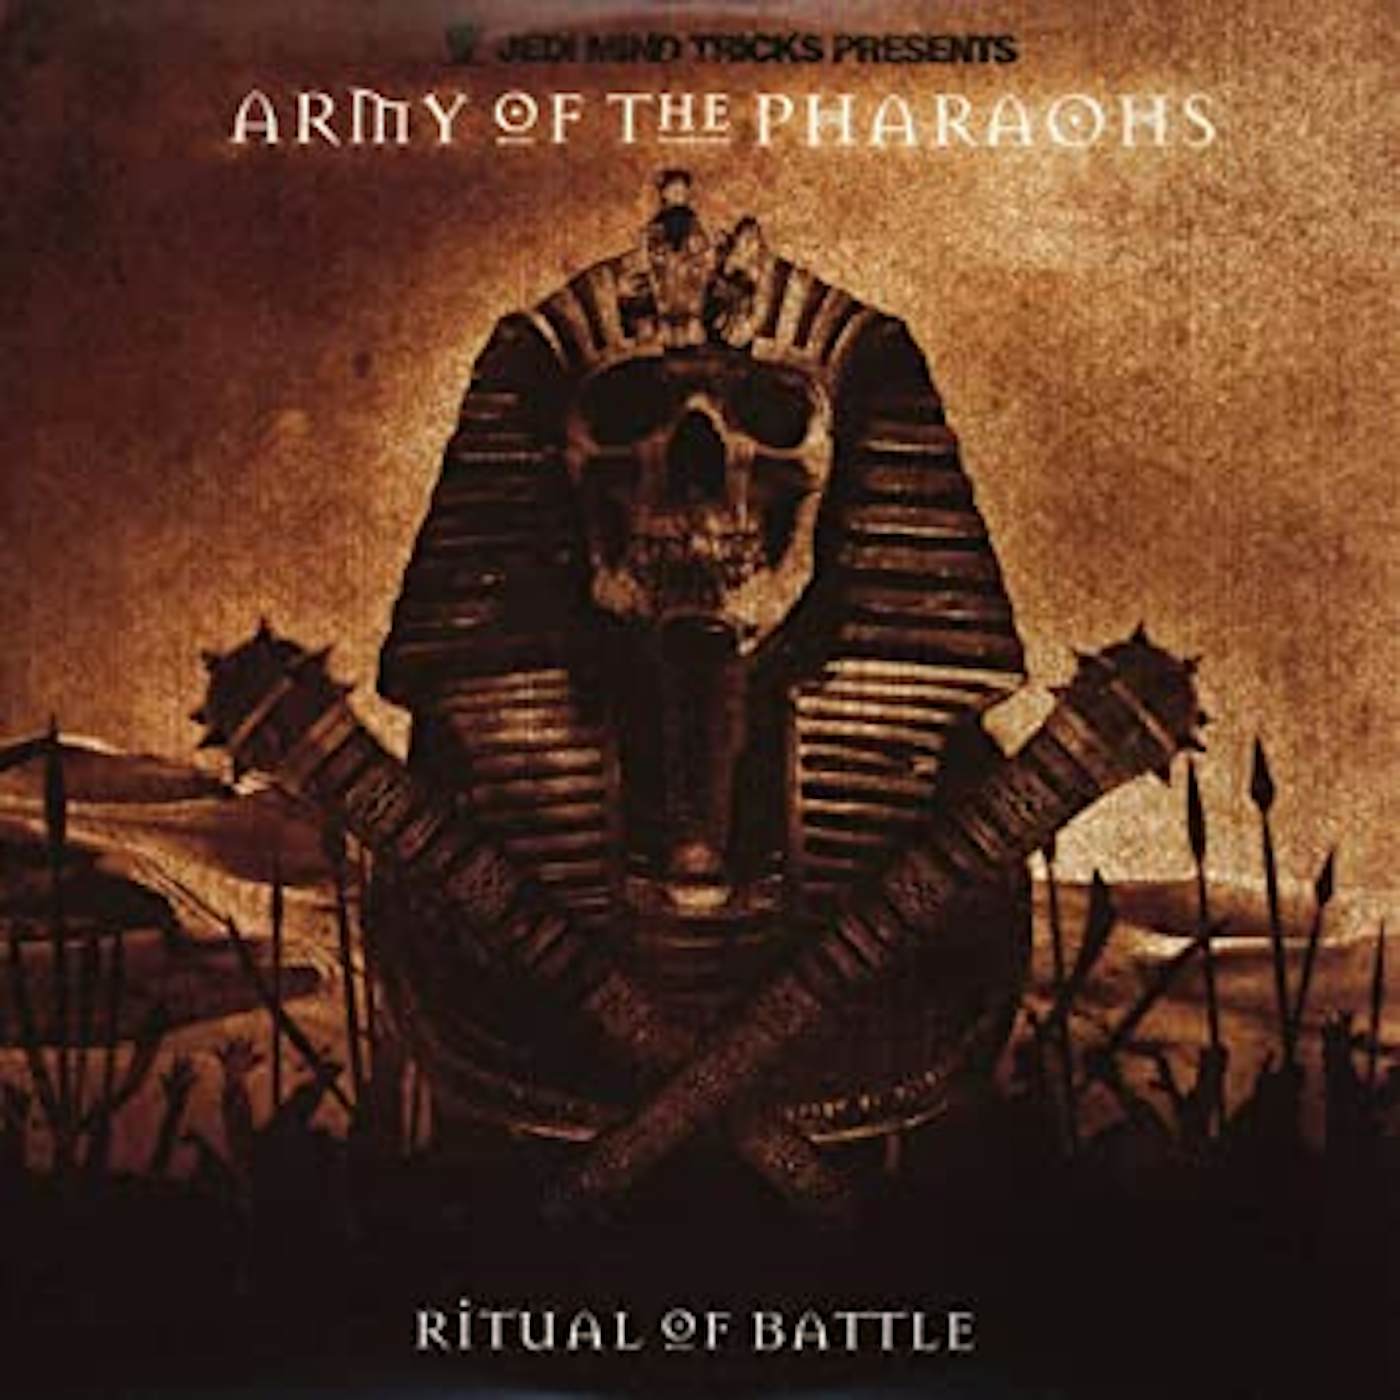 Jedi Mind Tricks Army Of The Pharaohs: Ritual Of Battle Vinyl Record